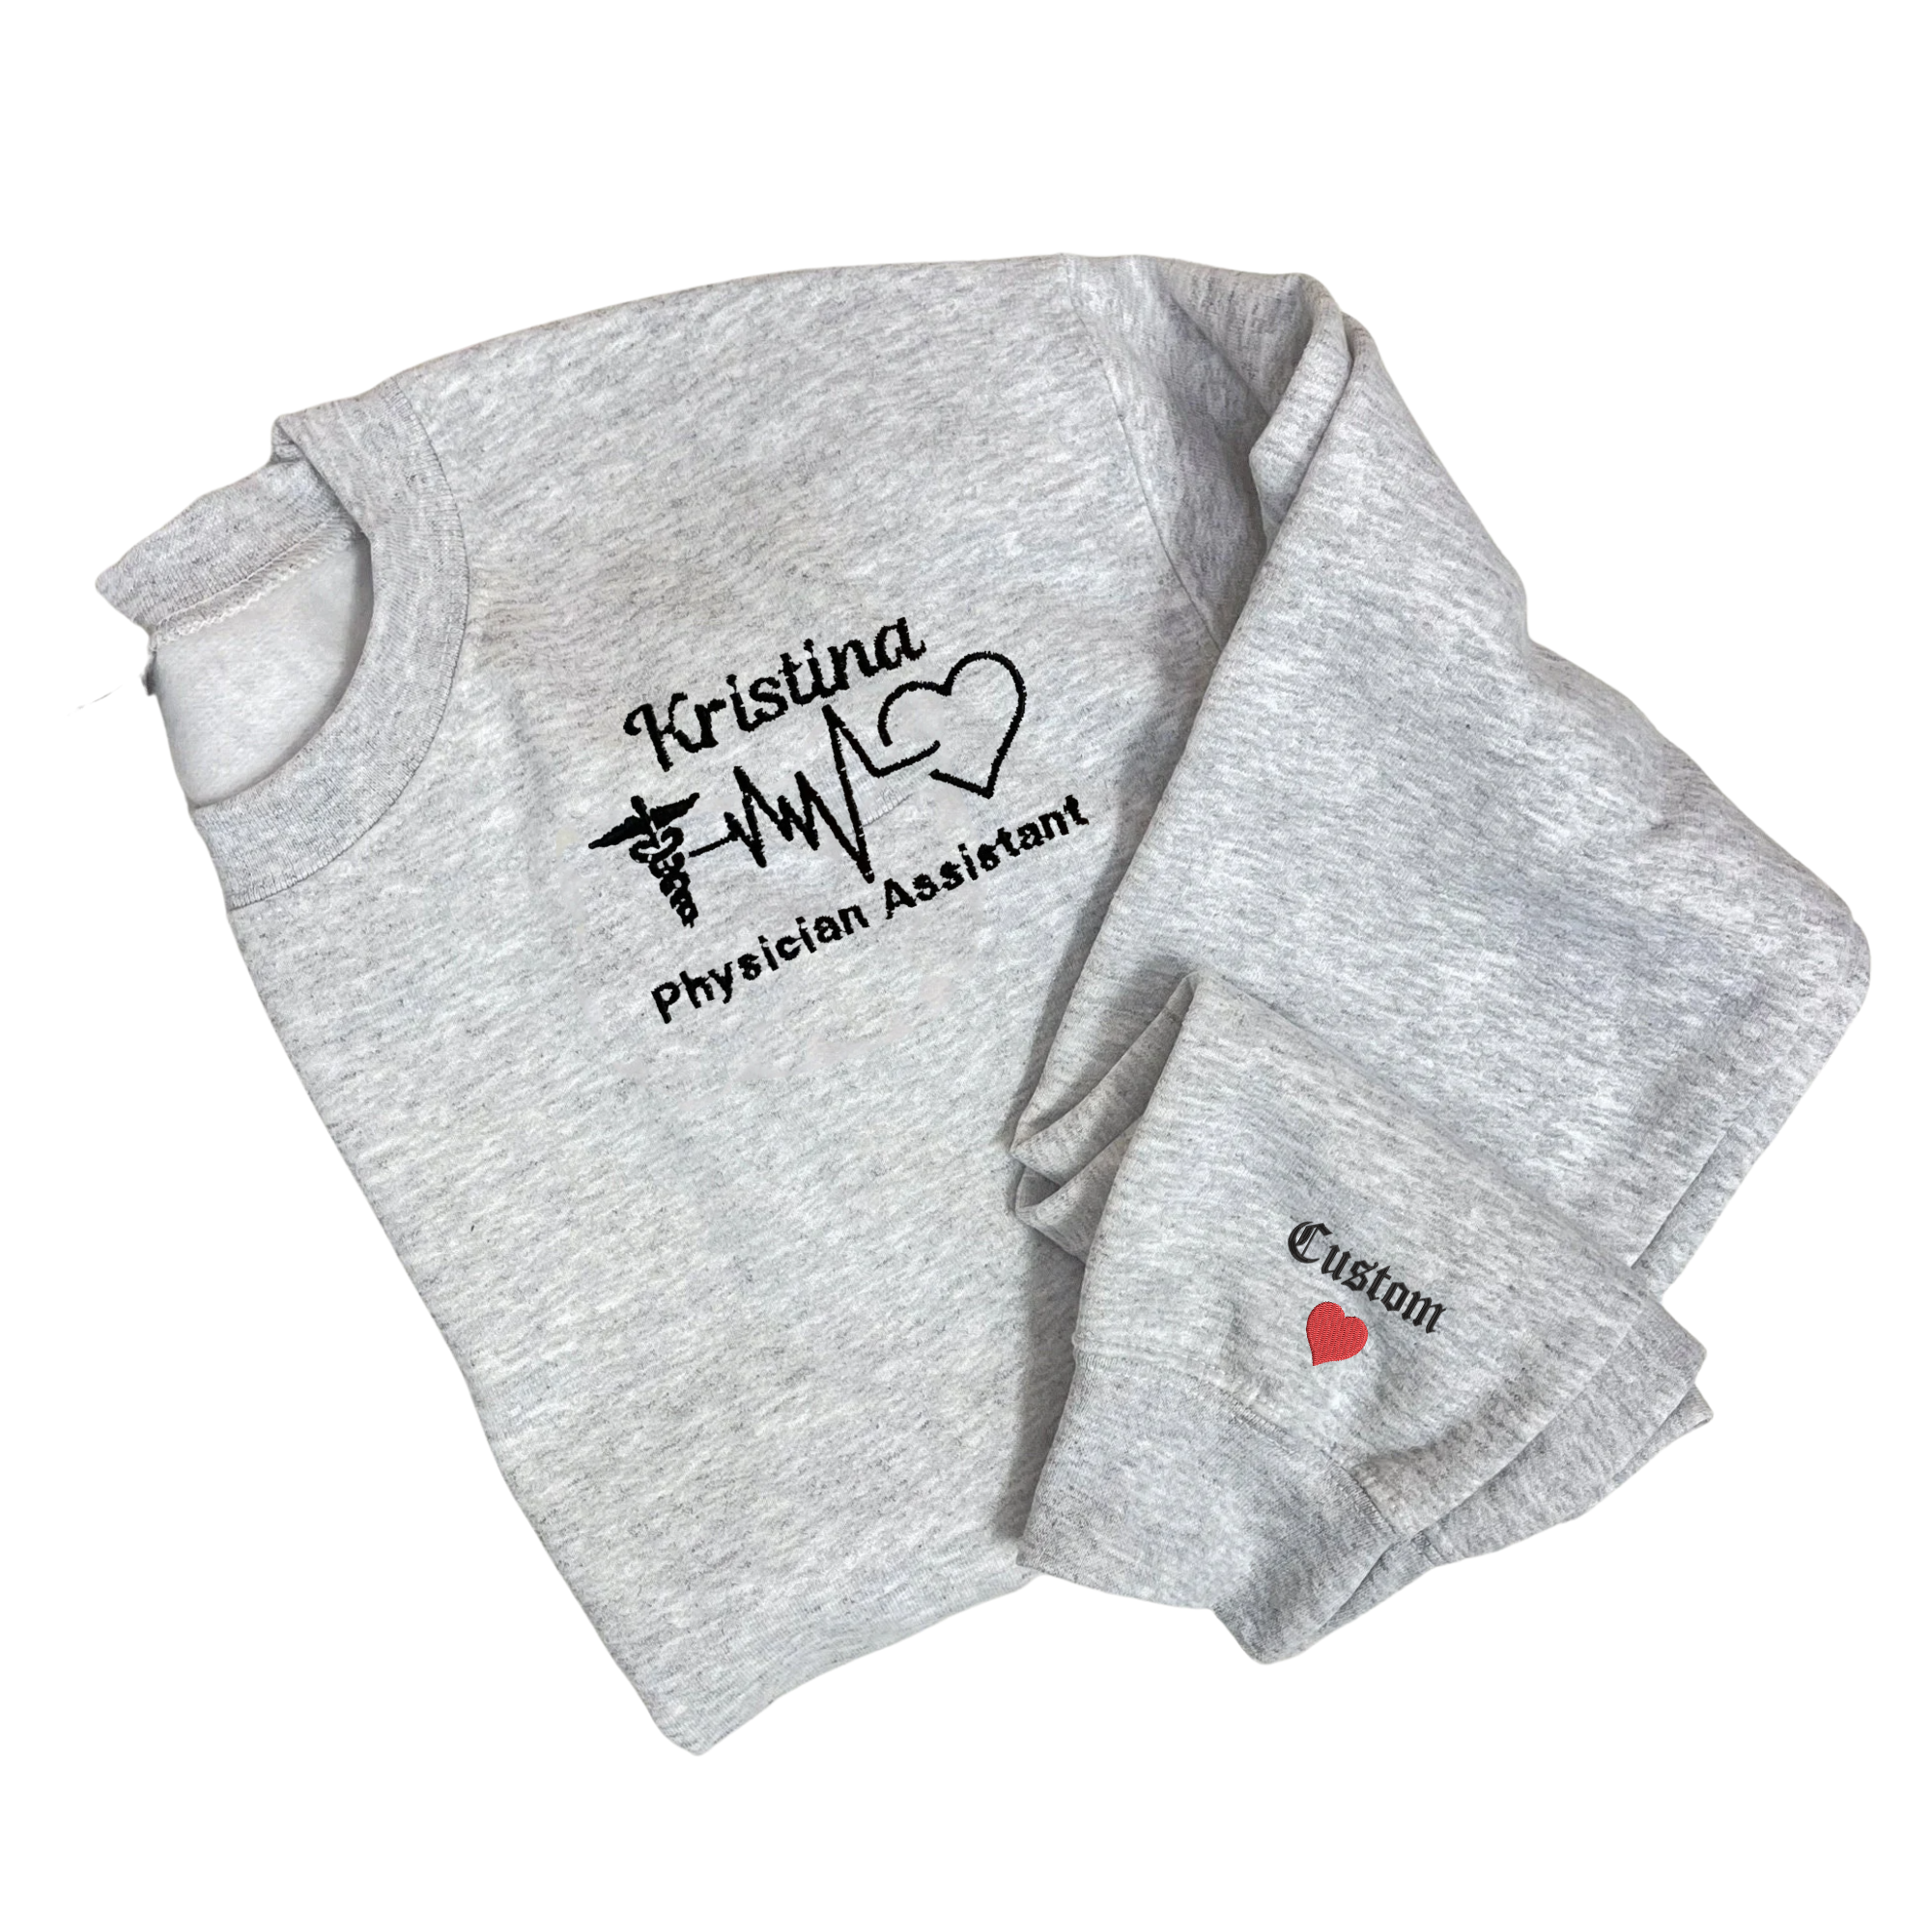 Personalized Teacher Gifts, Personalized Teacher Sweatshirt, Cute